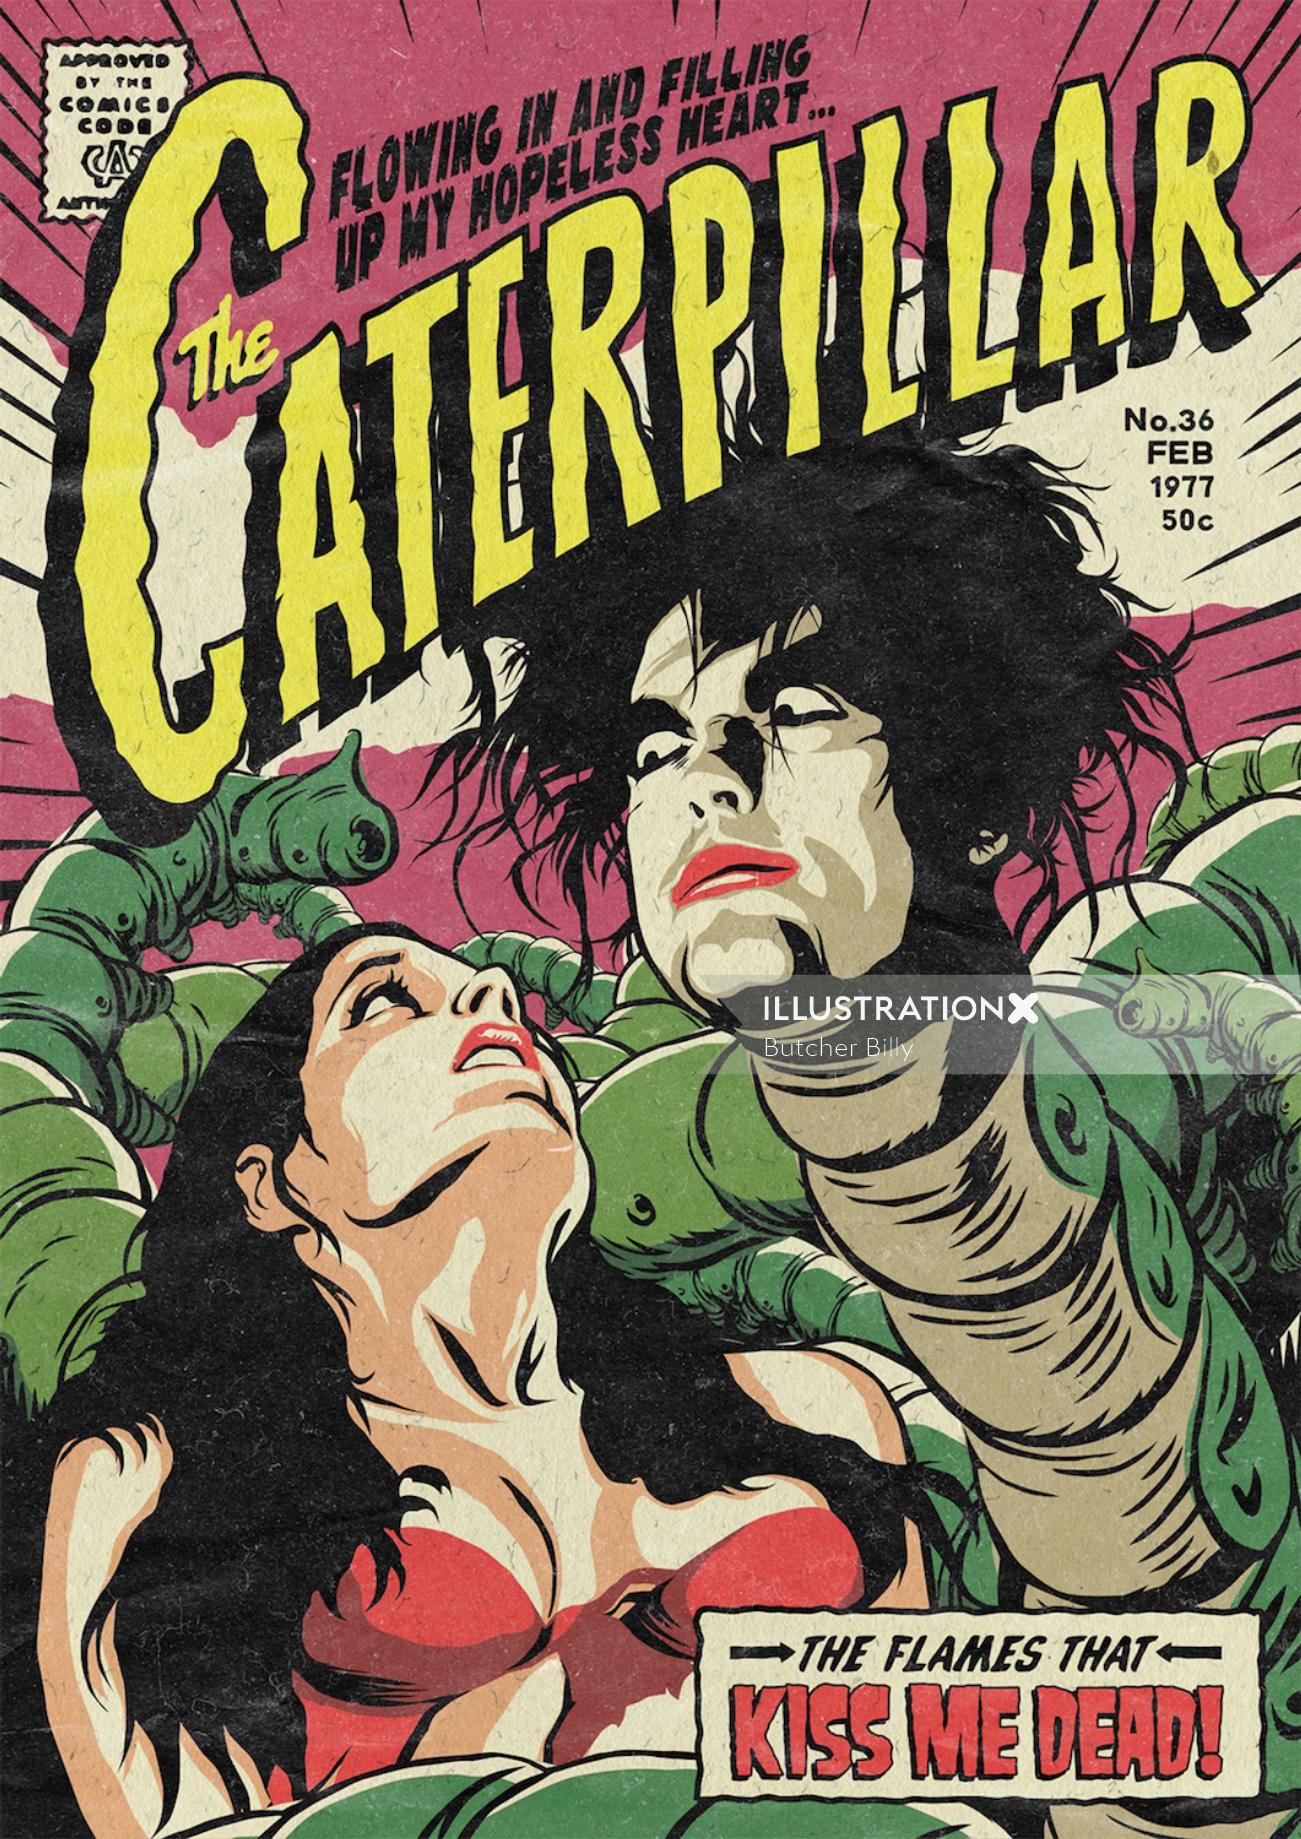 The caterpillar graphic illustration
